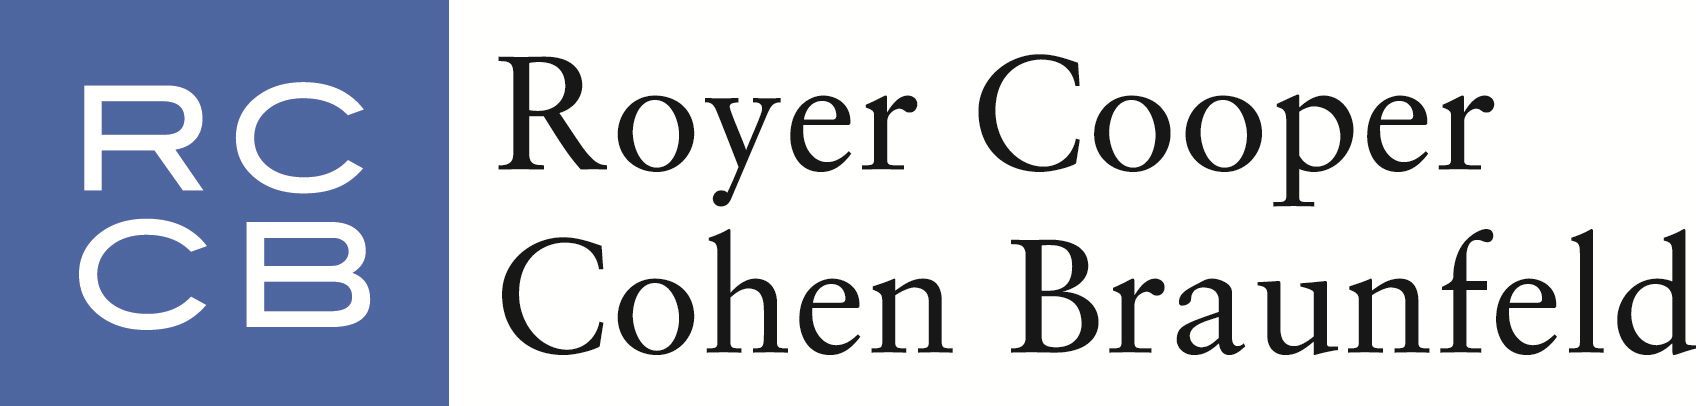 Royer Cooper Cohen Braunfeld LLC logo